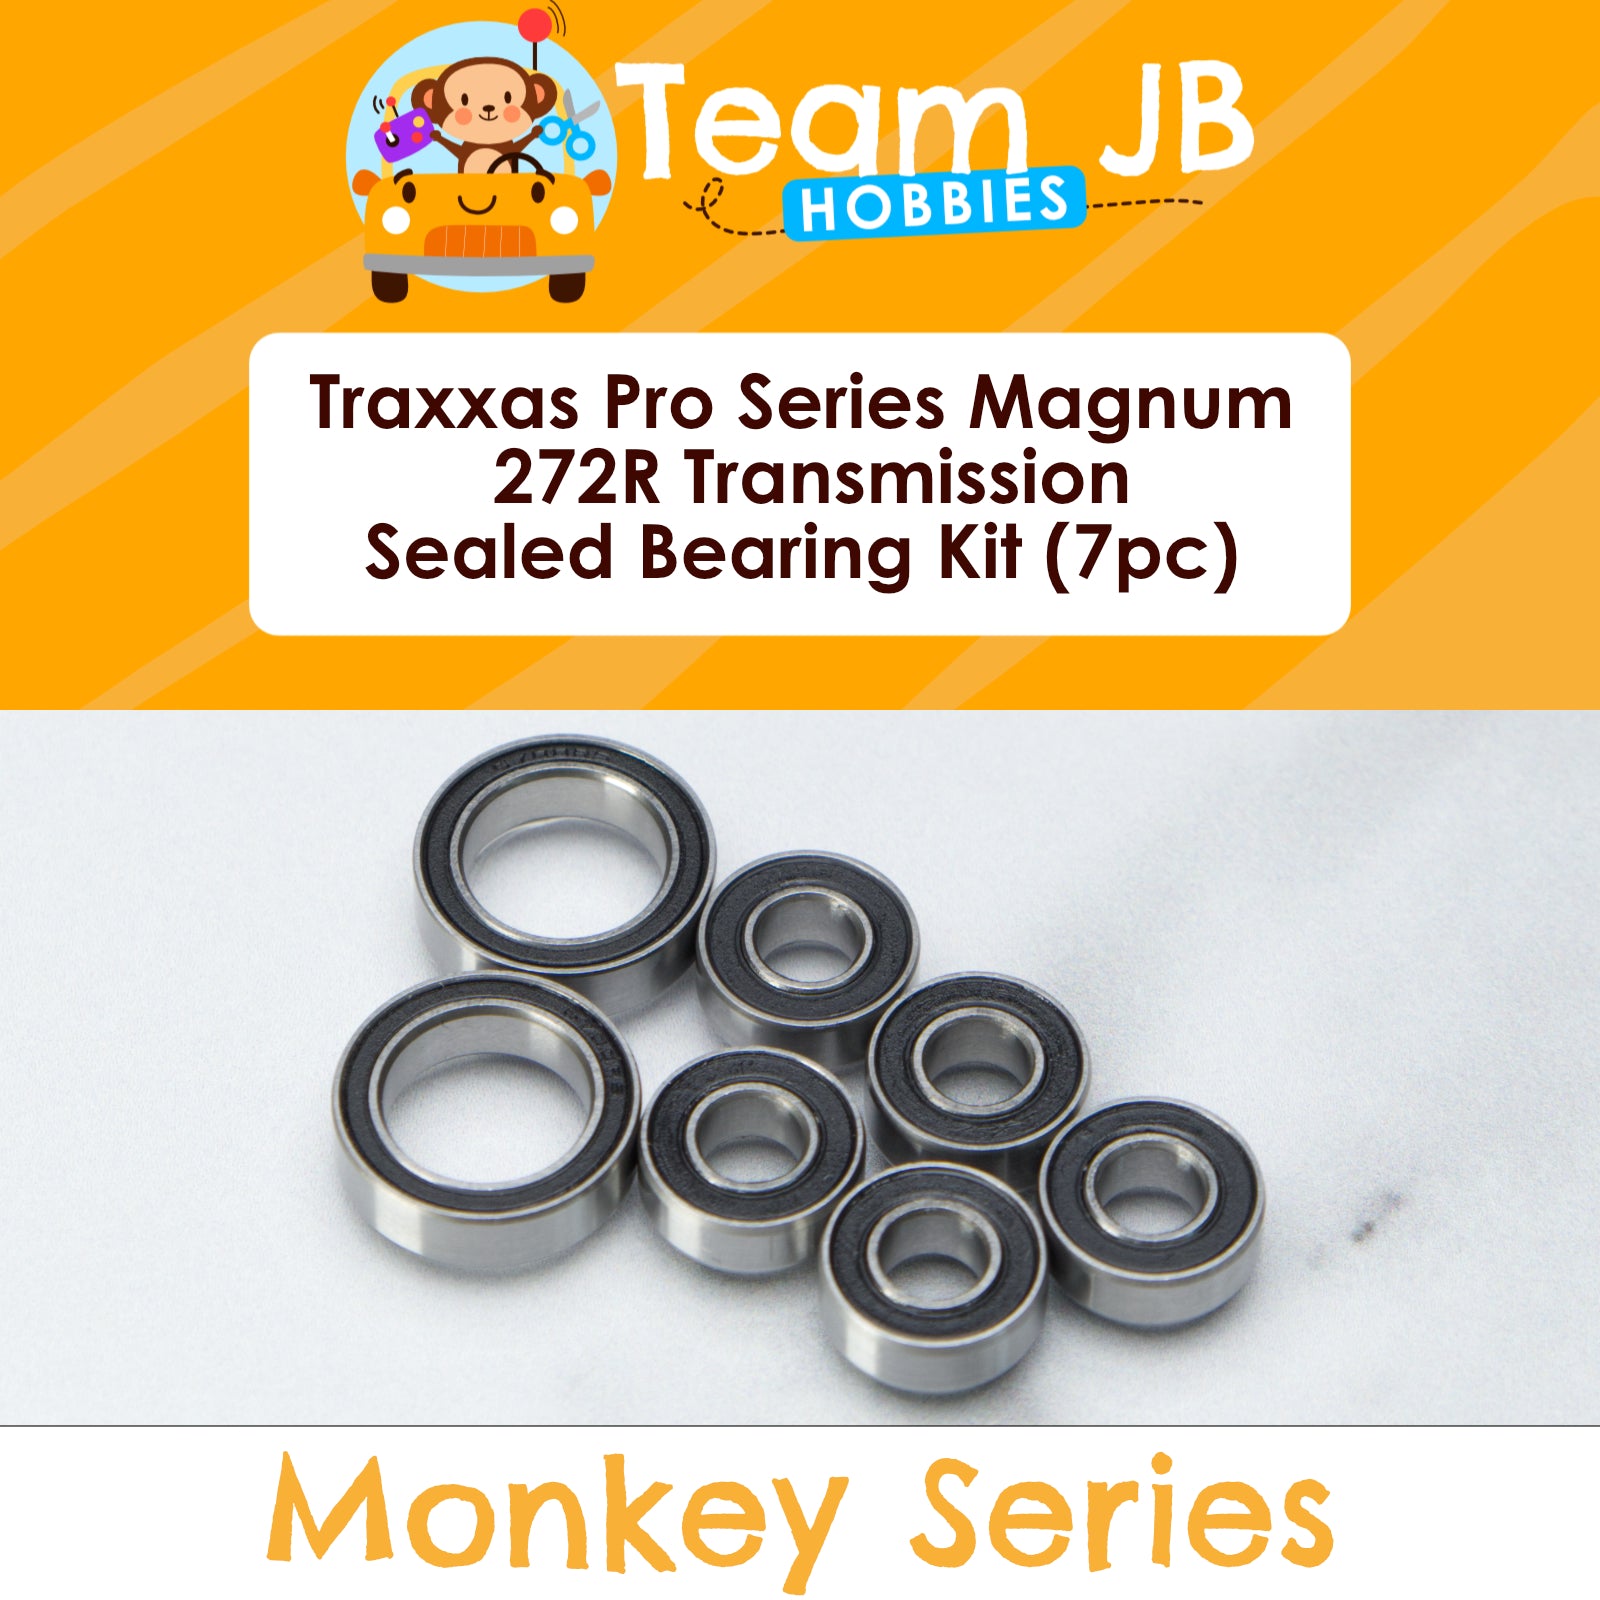 Traxxas Pro Series Magnum 272R Transmission - Sealed Bearing Kit